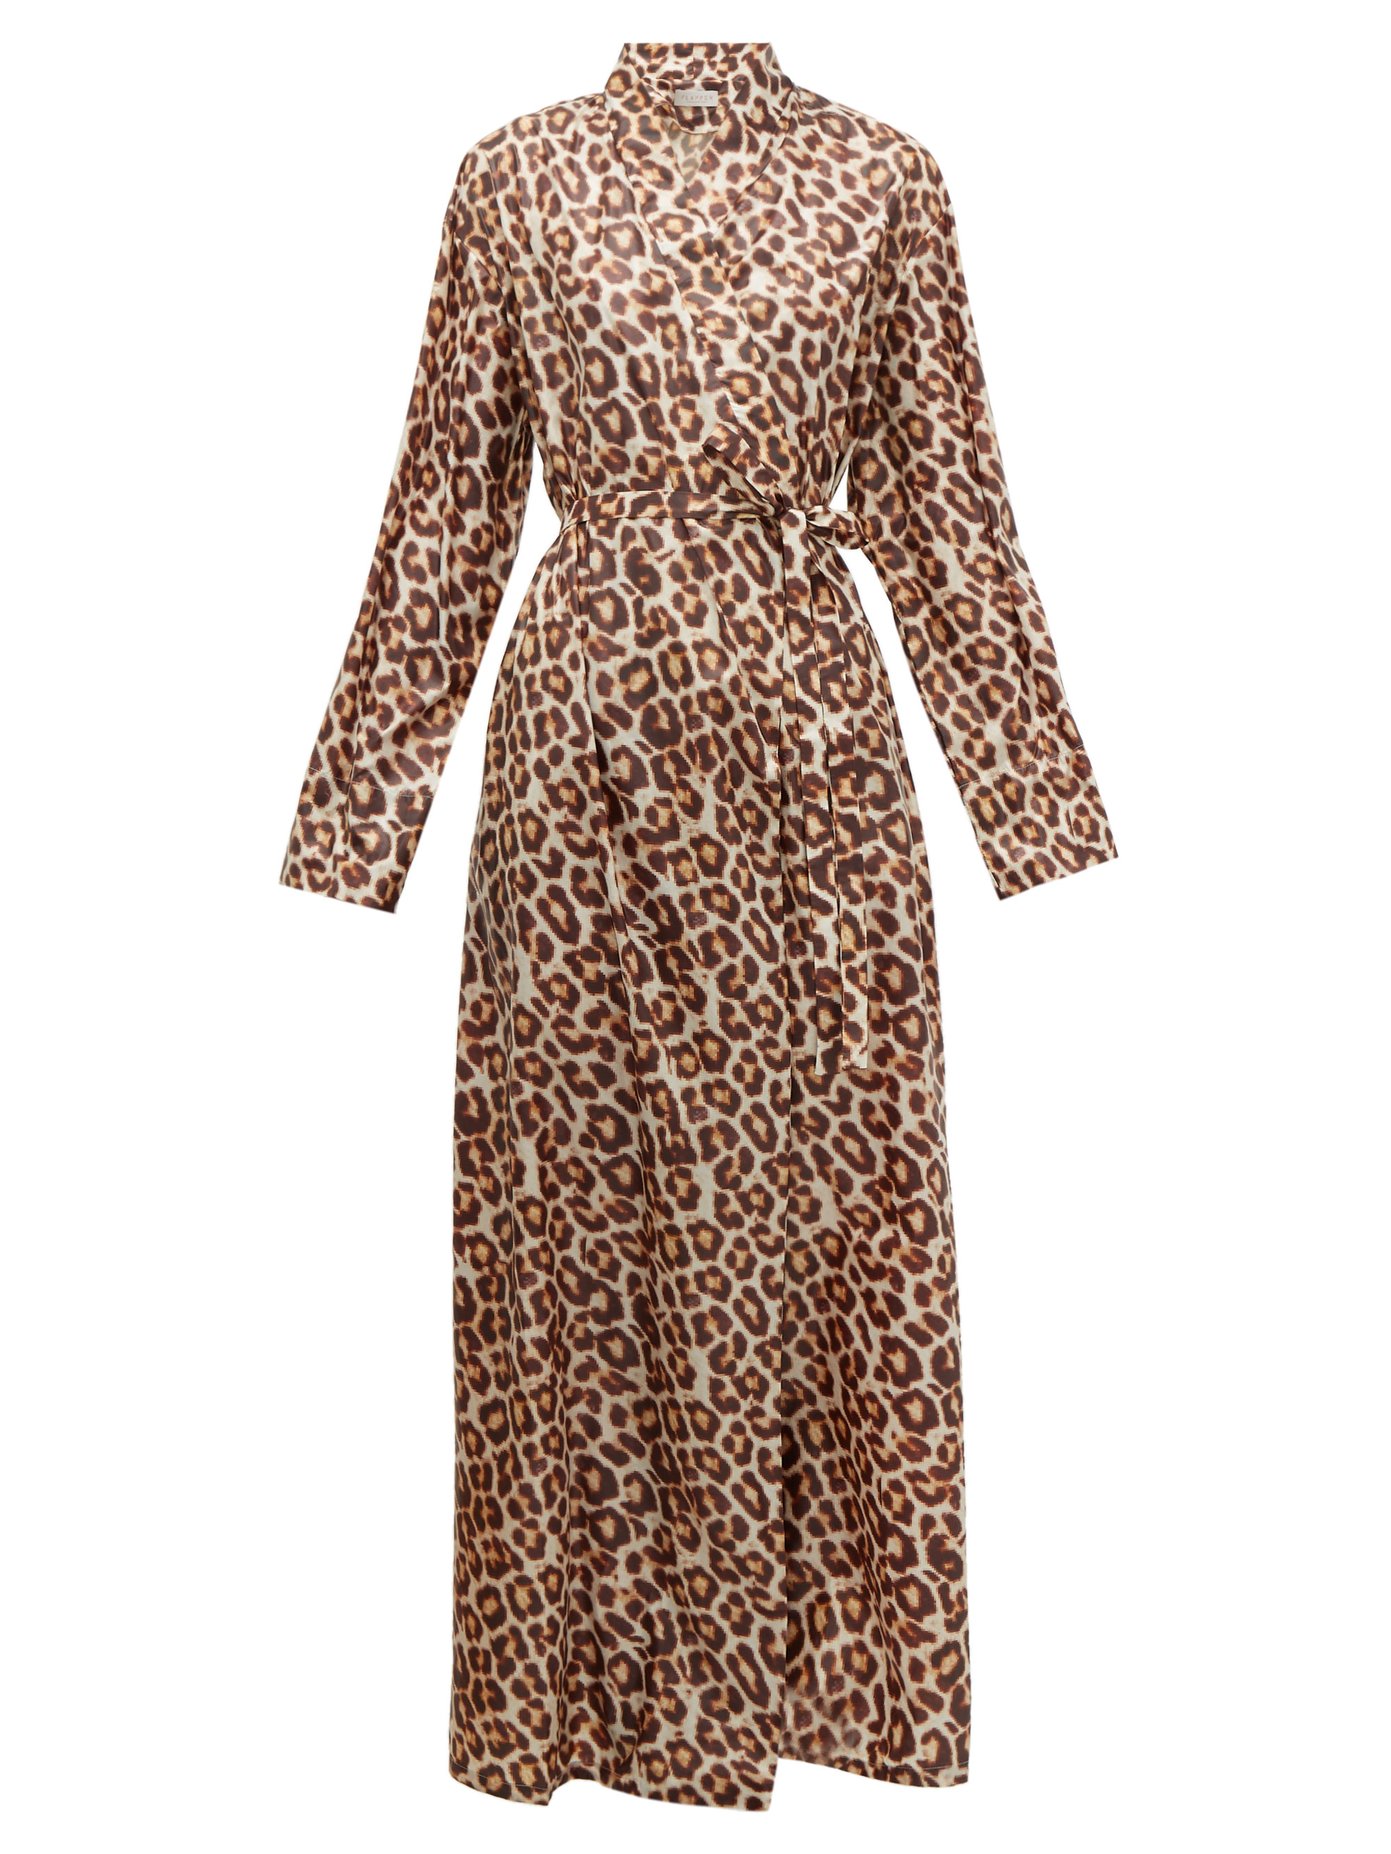 leopard print wrap dress uk